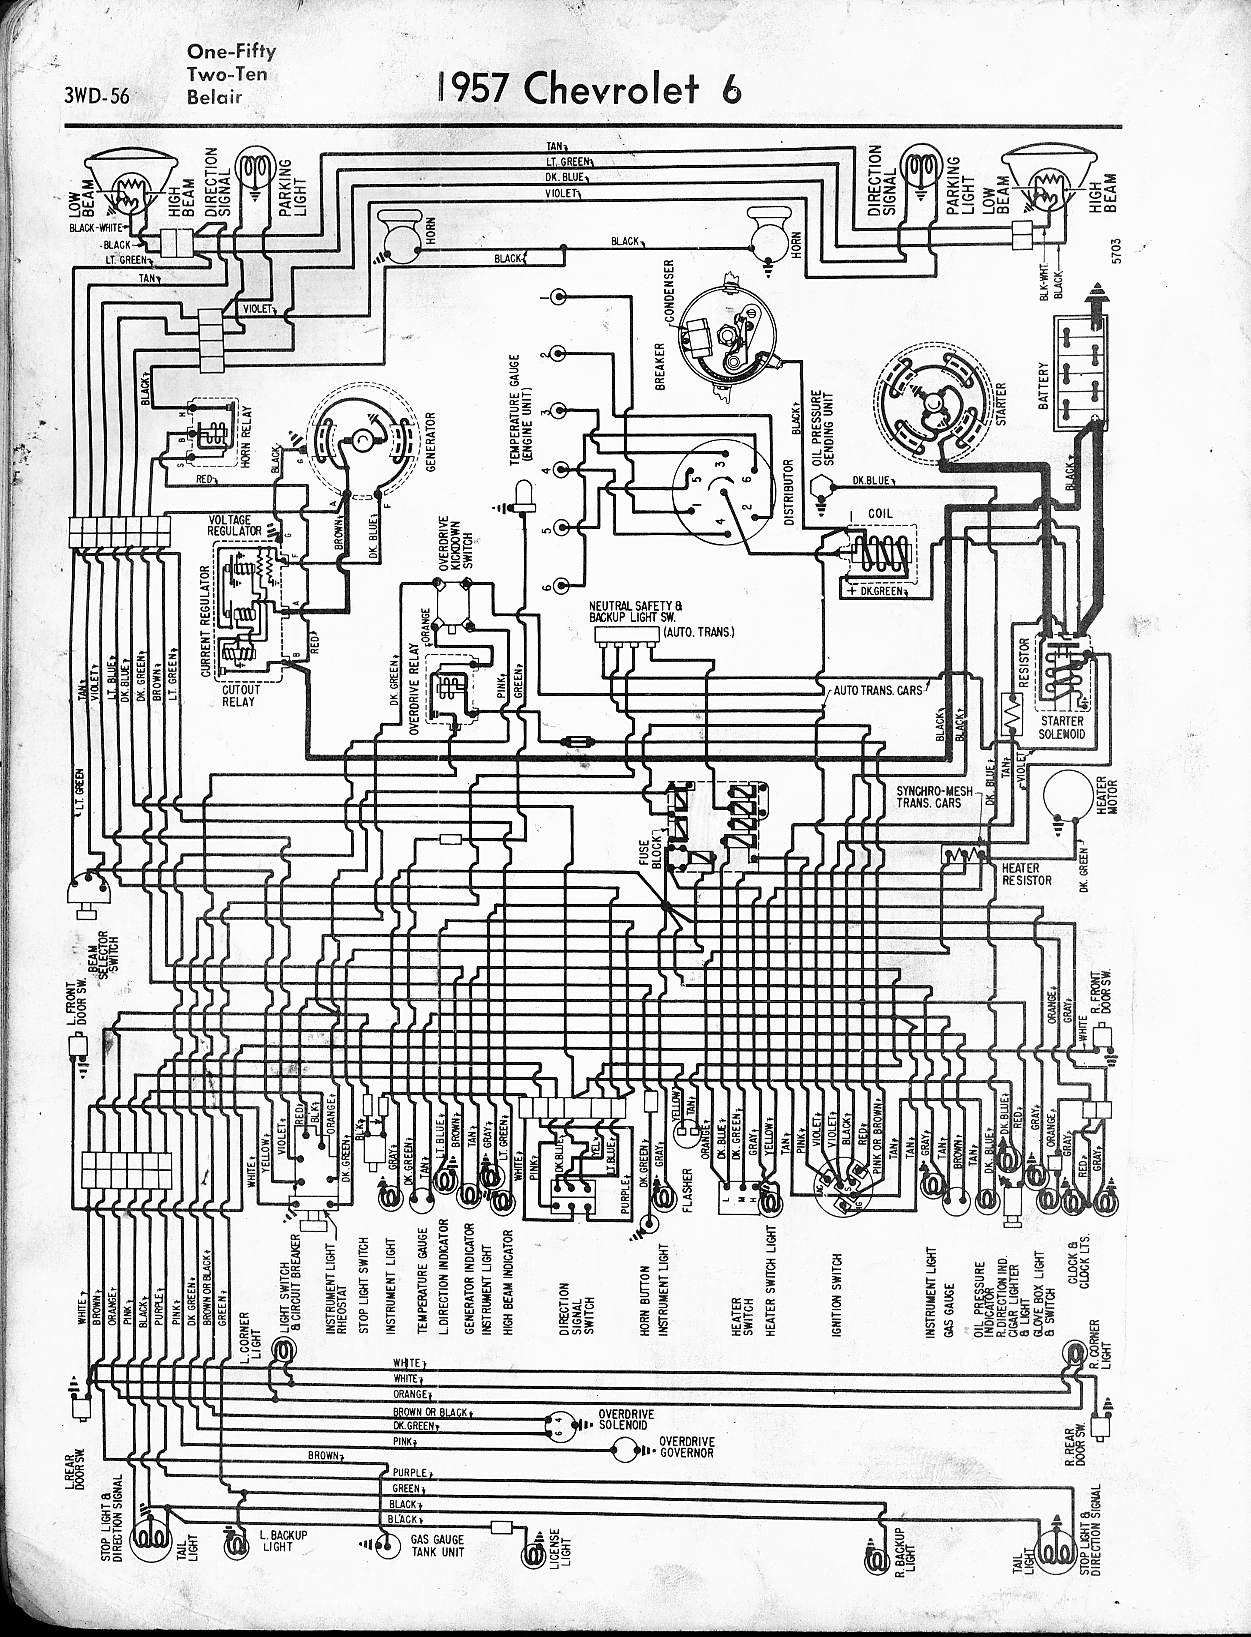 1963 Chevy Truck Wiring Diagram 57 65 Chevy Wiring Diagrams Of 1963 Chevy Truck Wiring Diagram